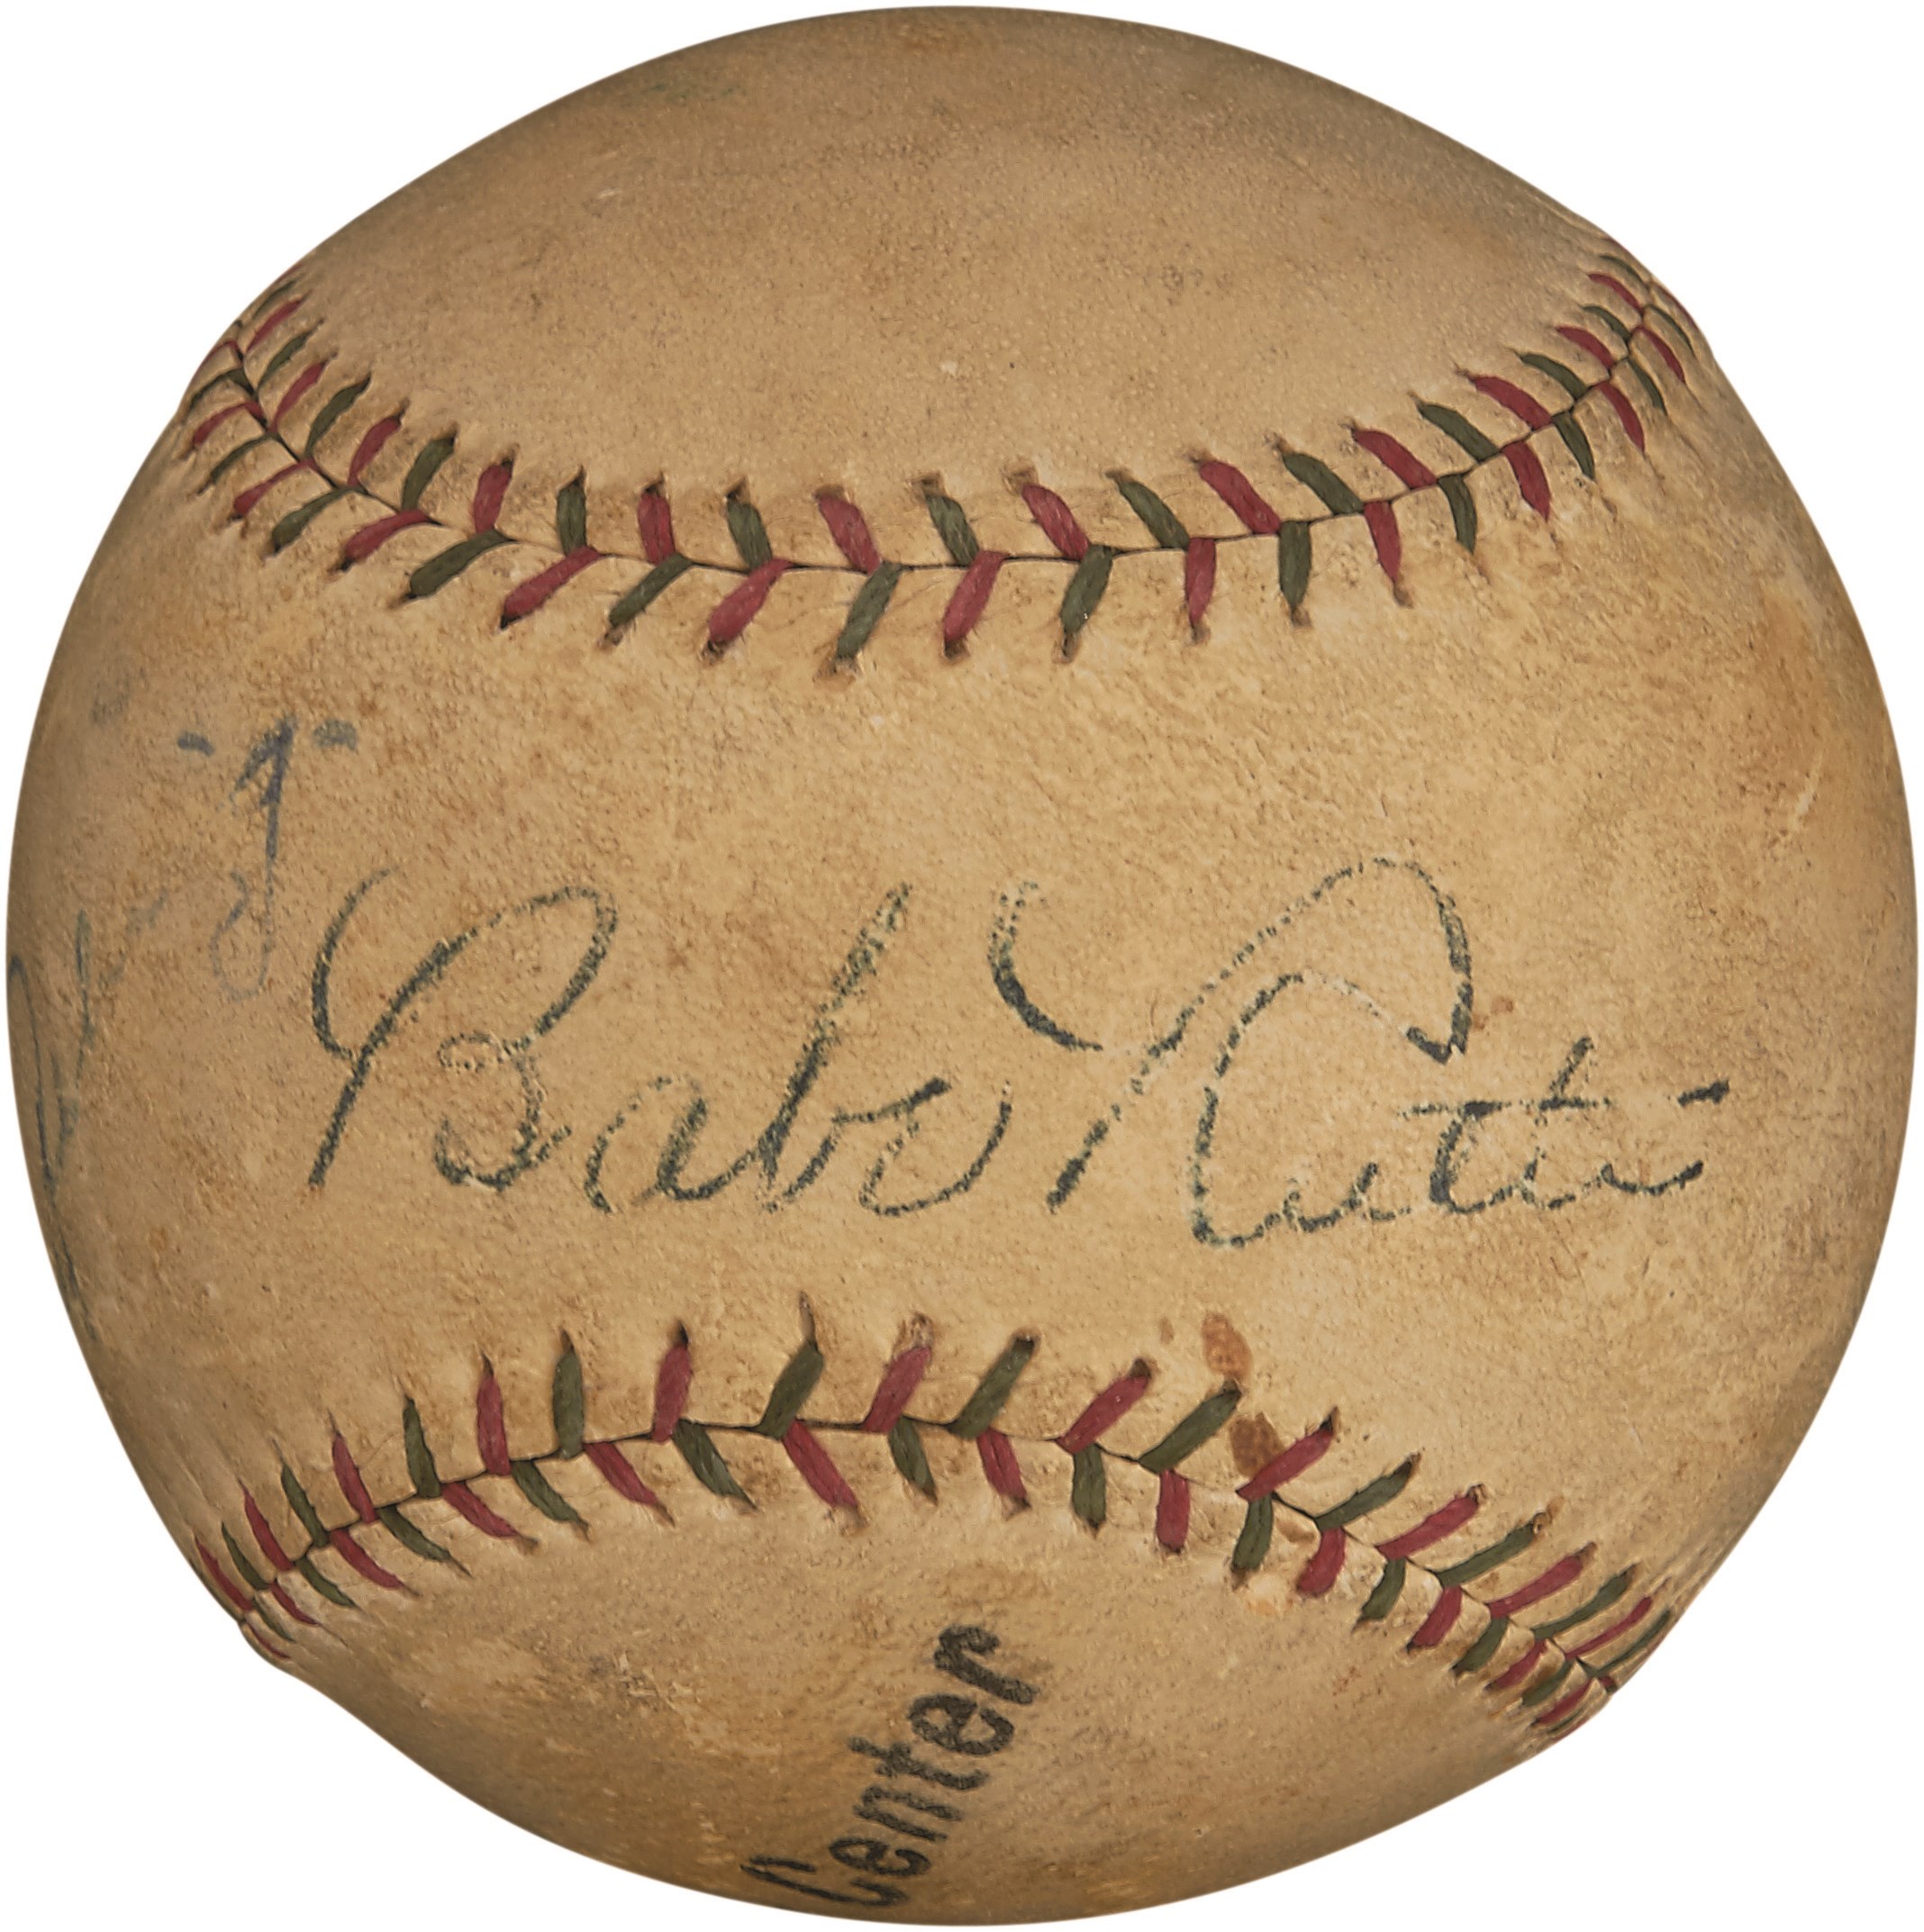 - Babe Ruth and Lou Gehrig Signed Baseball (PSA)